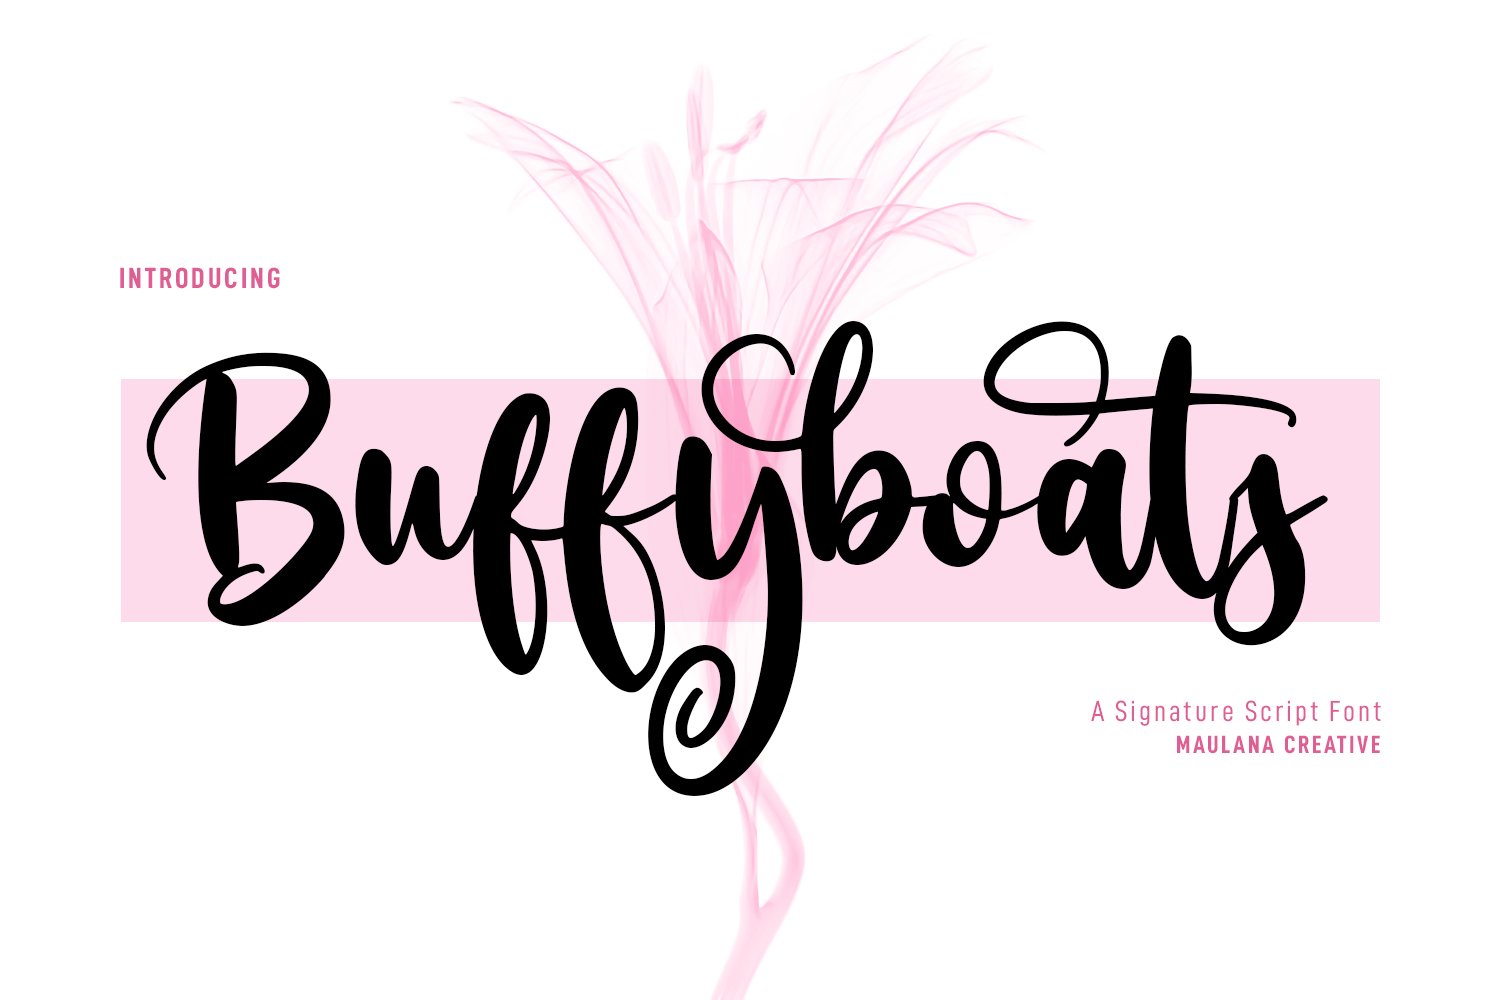 Buffyboats Handwriten Script Font cover image.